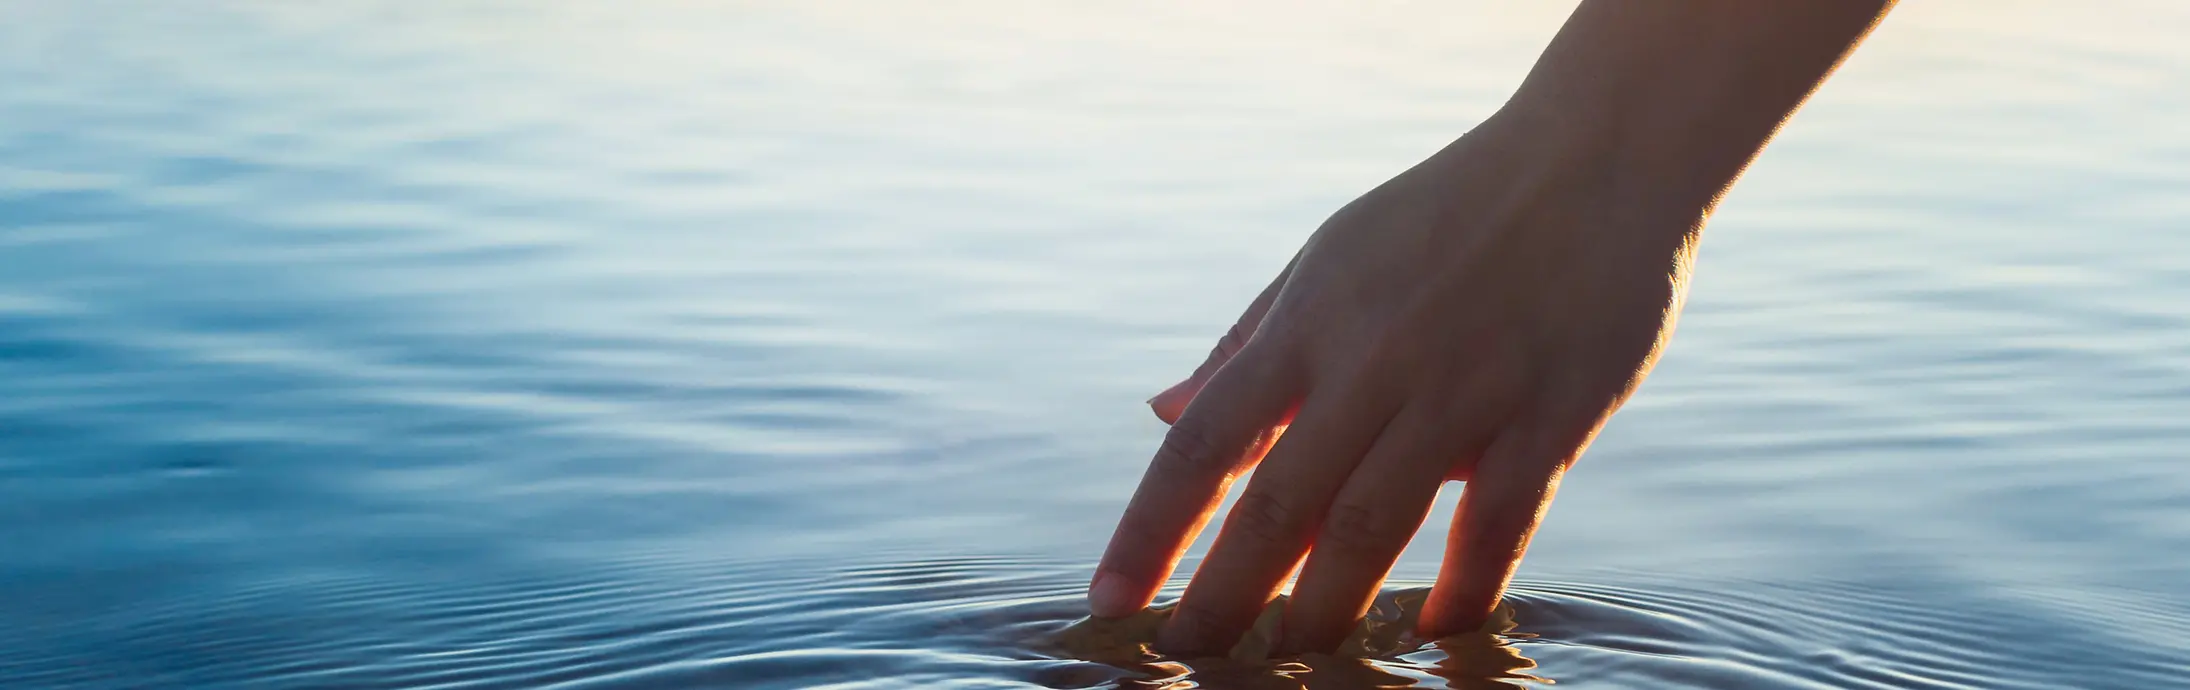 Una mano acaricia una tranquila superficie de agua frente al horizonte.